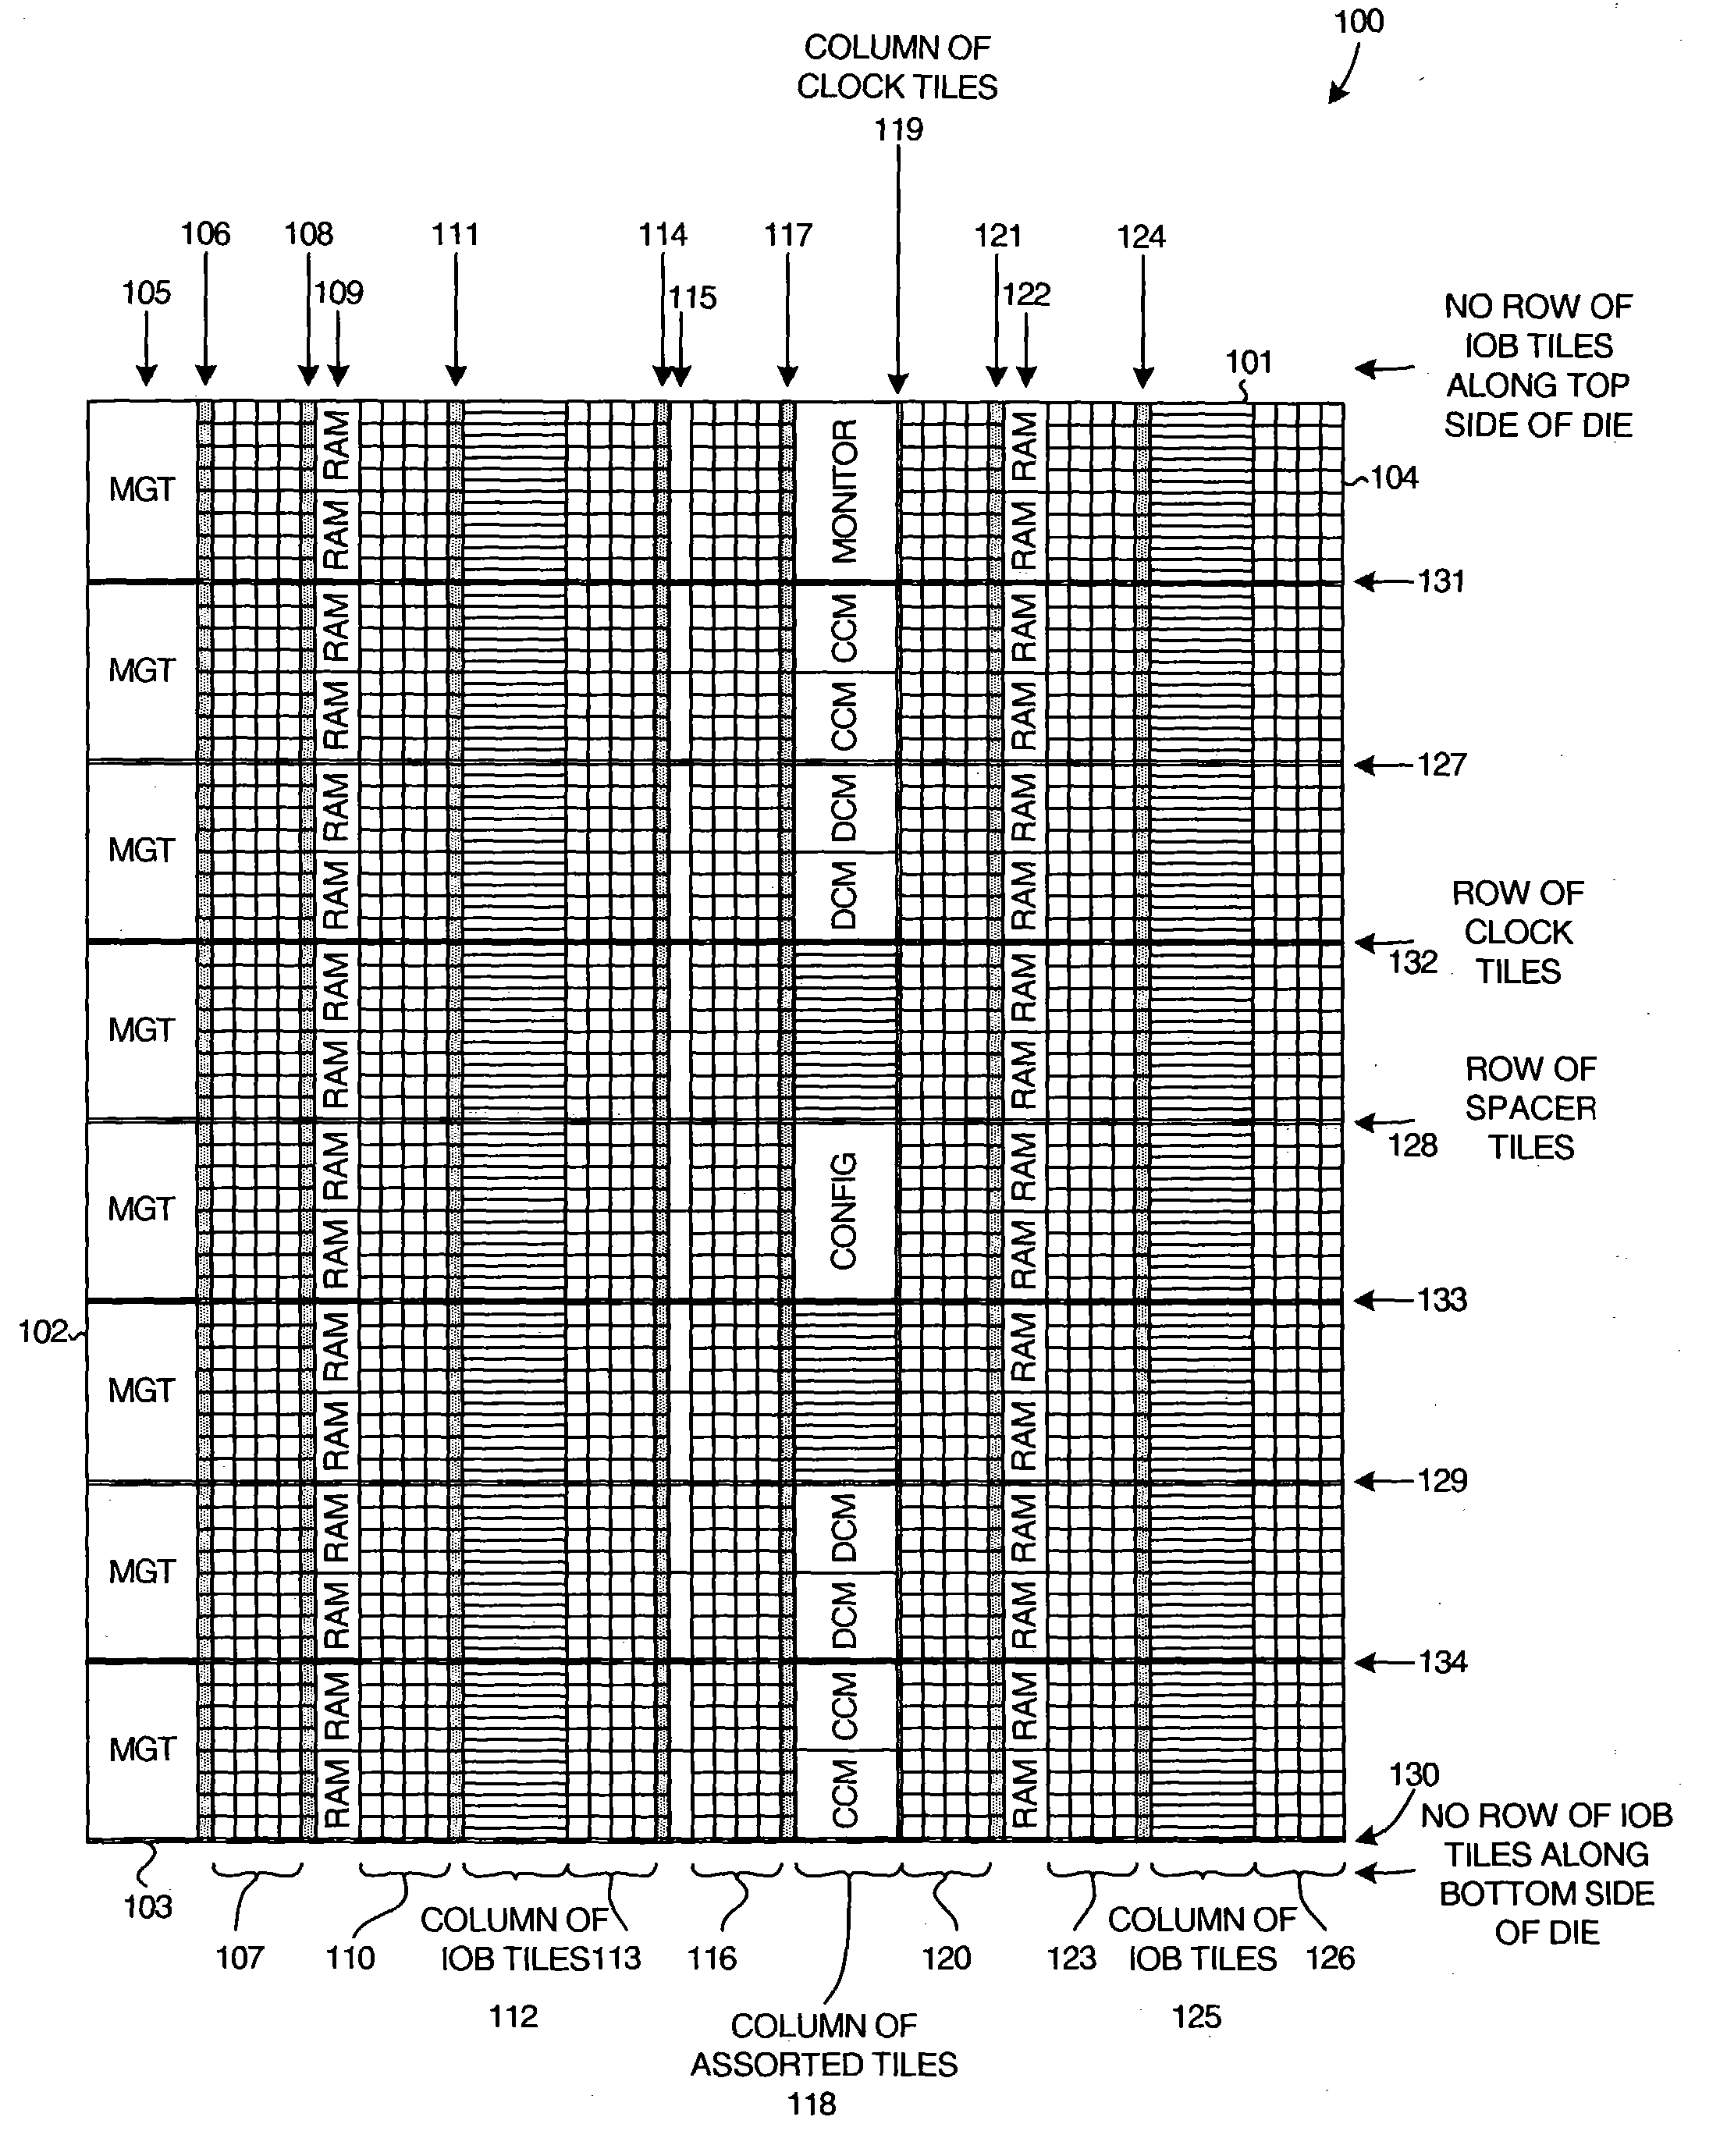 Columnar floorplan